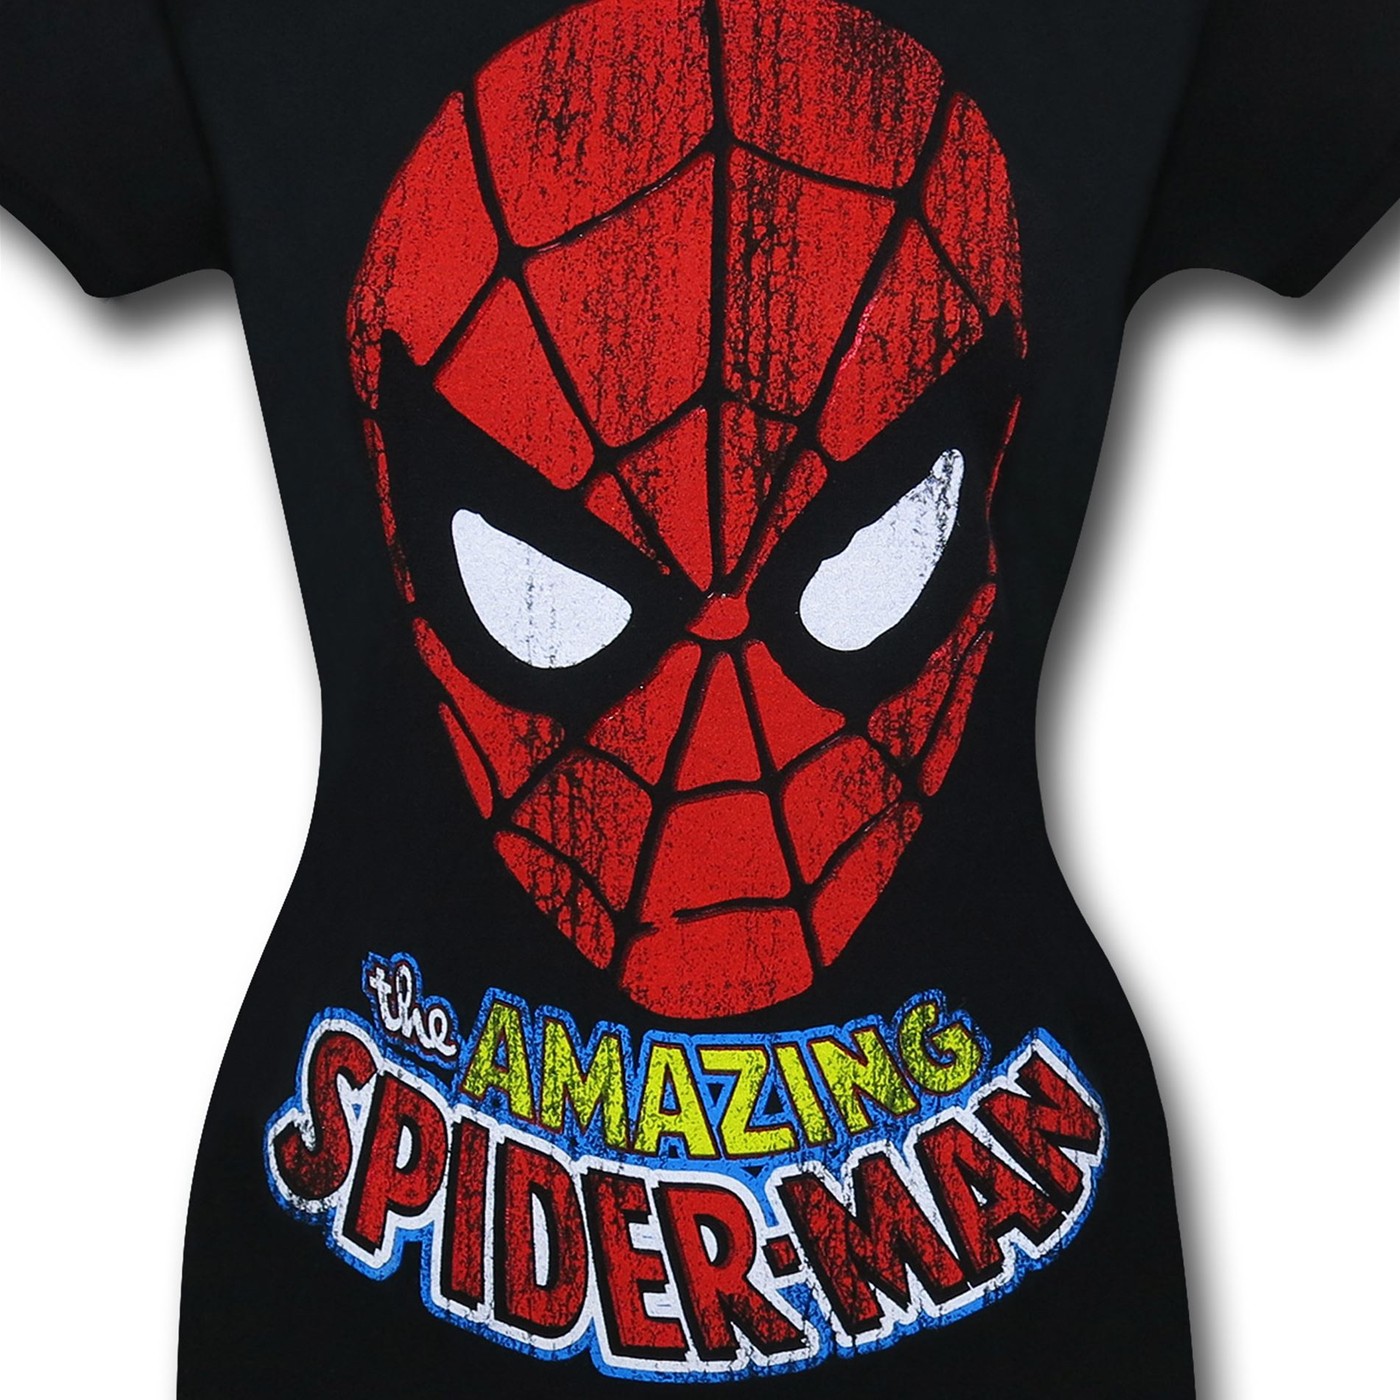 Spiderman Splatter Head Women's T-Shirt